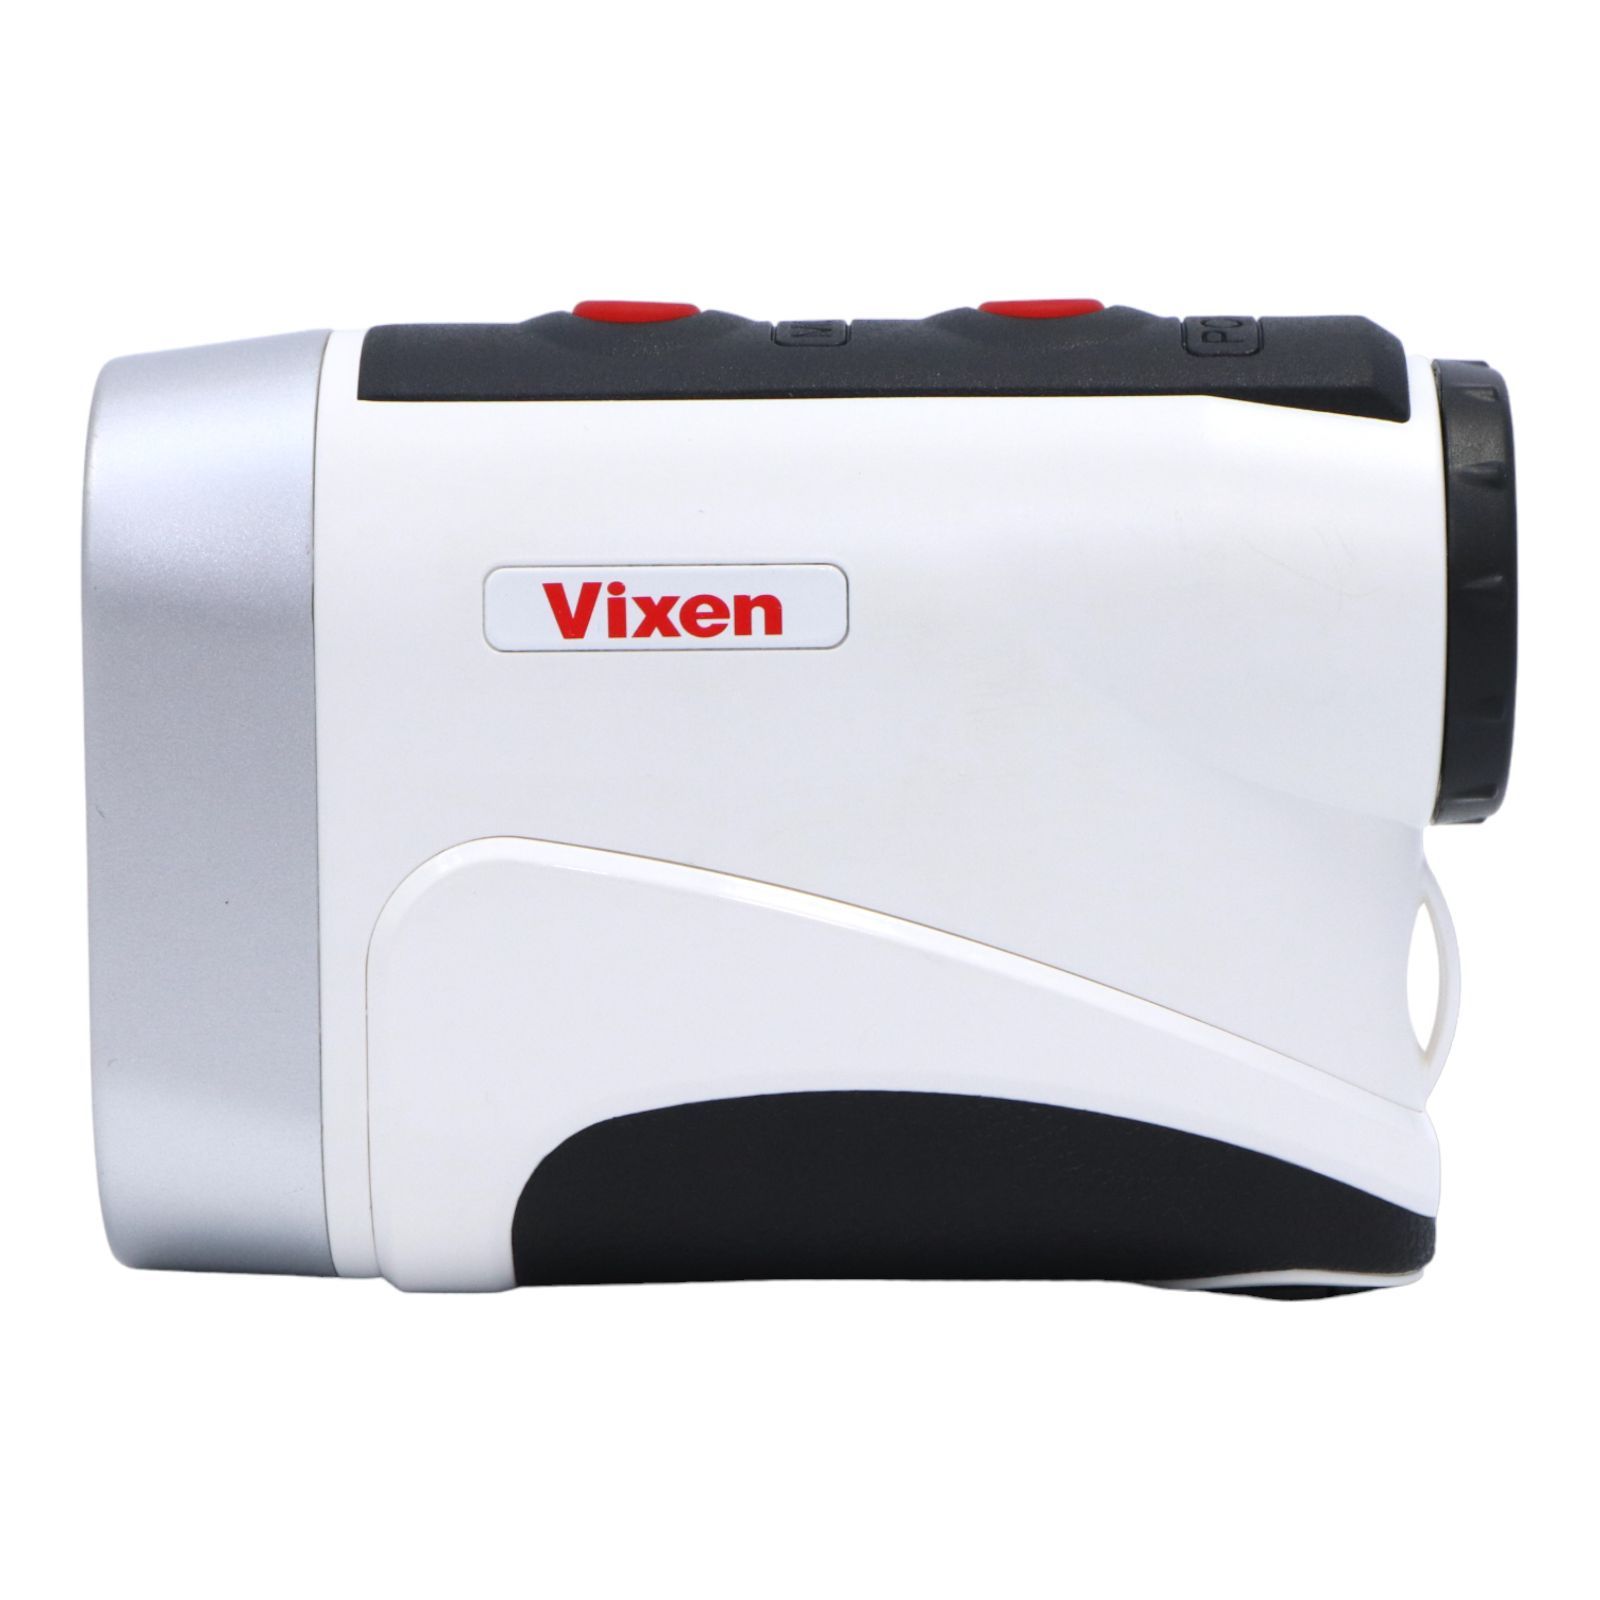 Vixen ビクセン ゴルフ用レーザー距離計 VRF800VZ 15751 【 良い（B